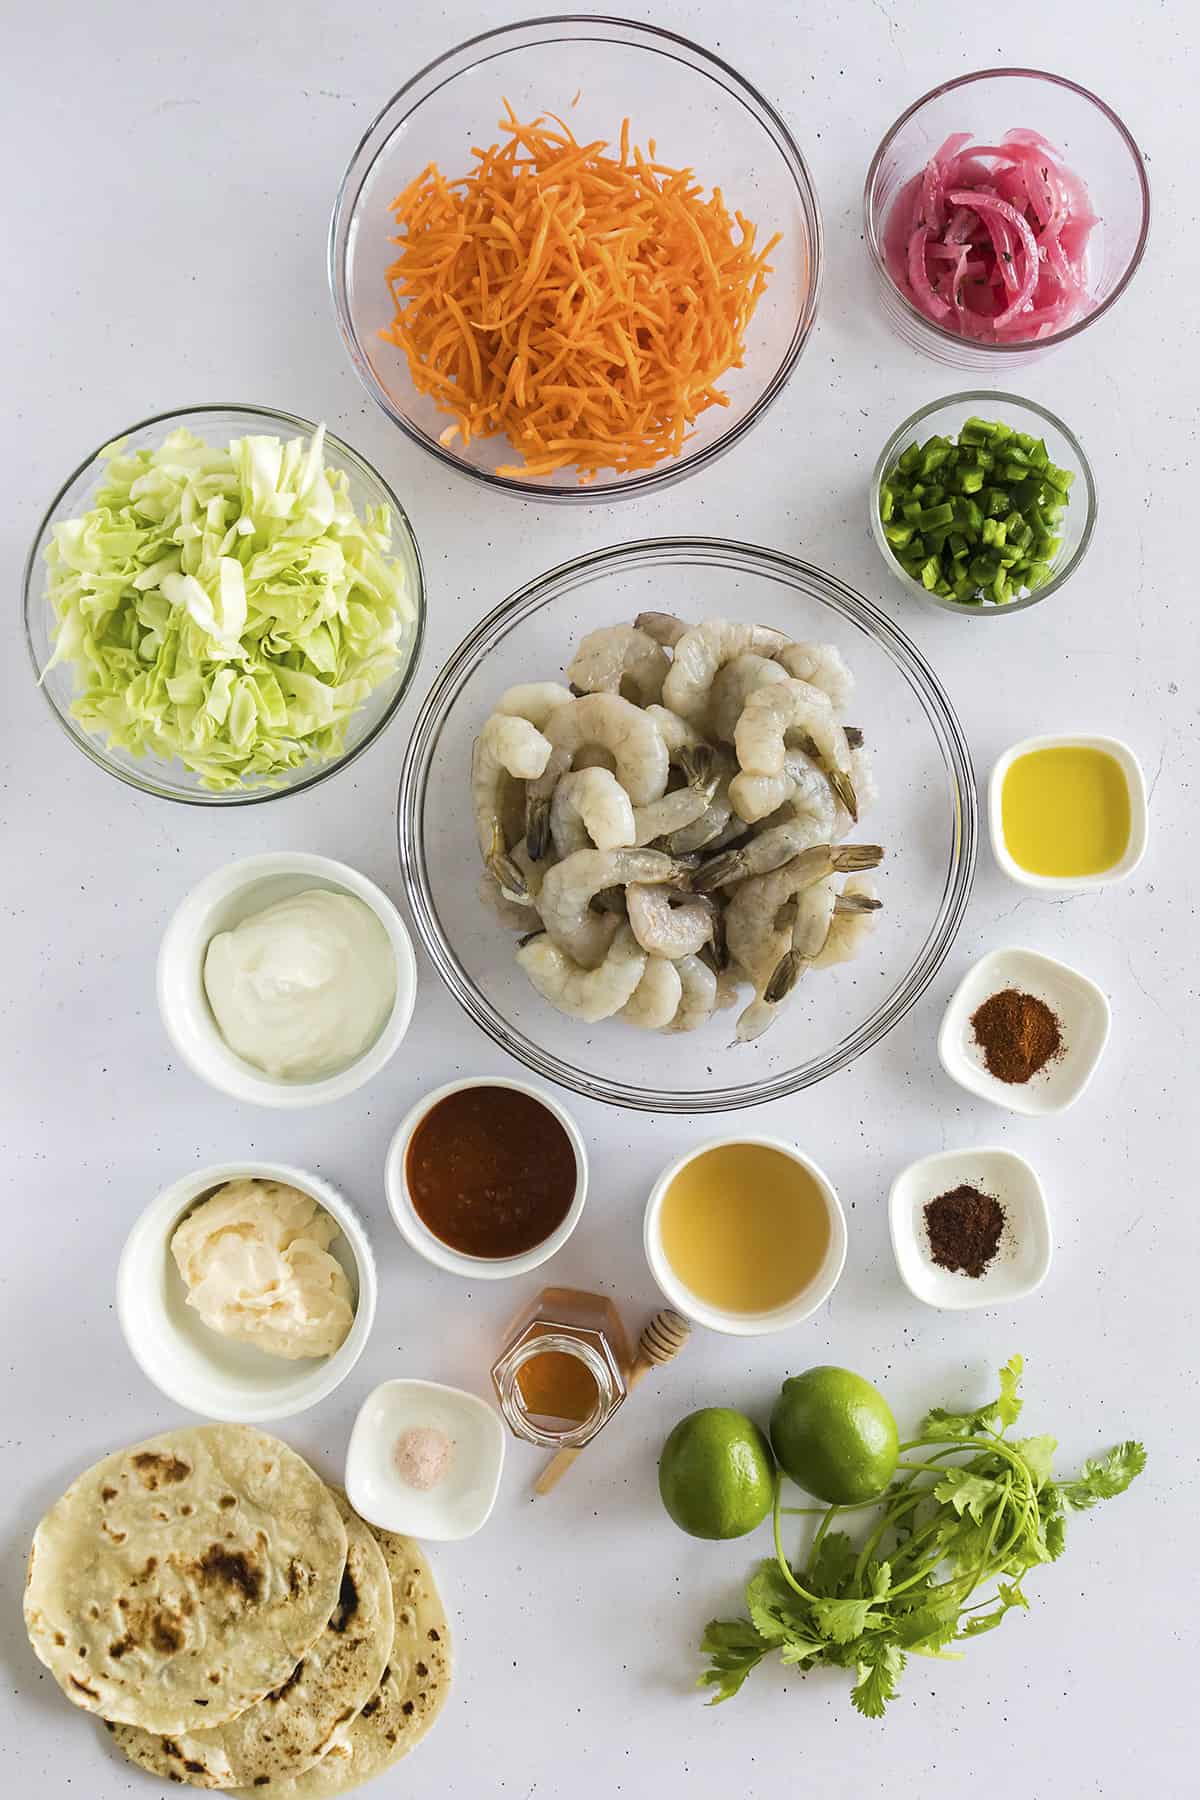 Ingredients to make baja shrimp tacos.